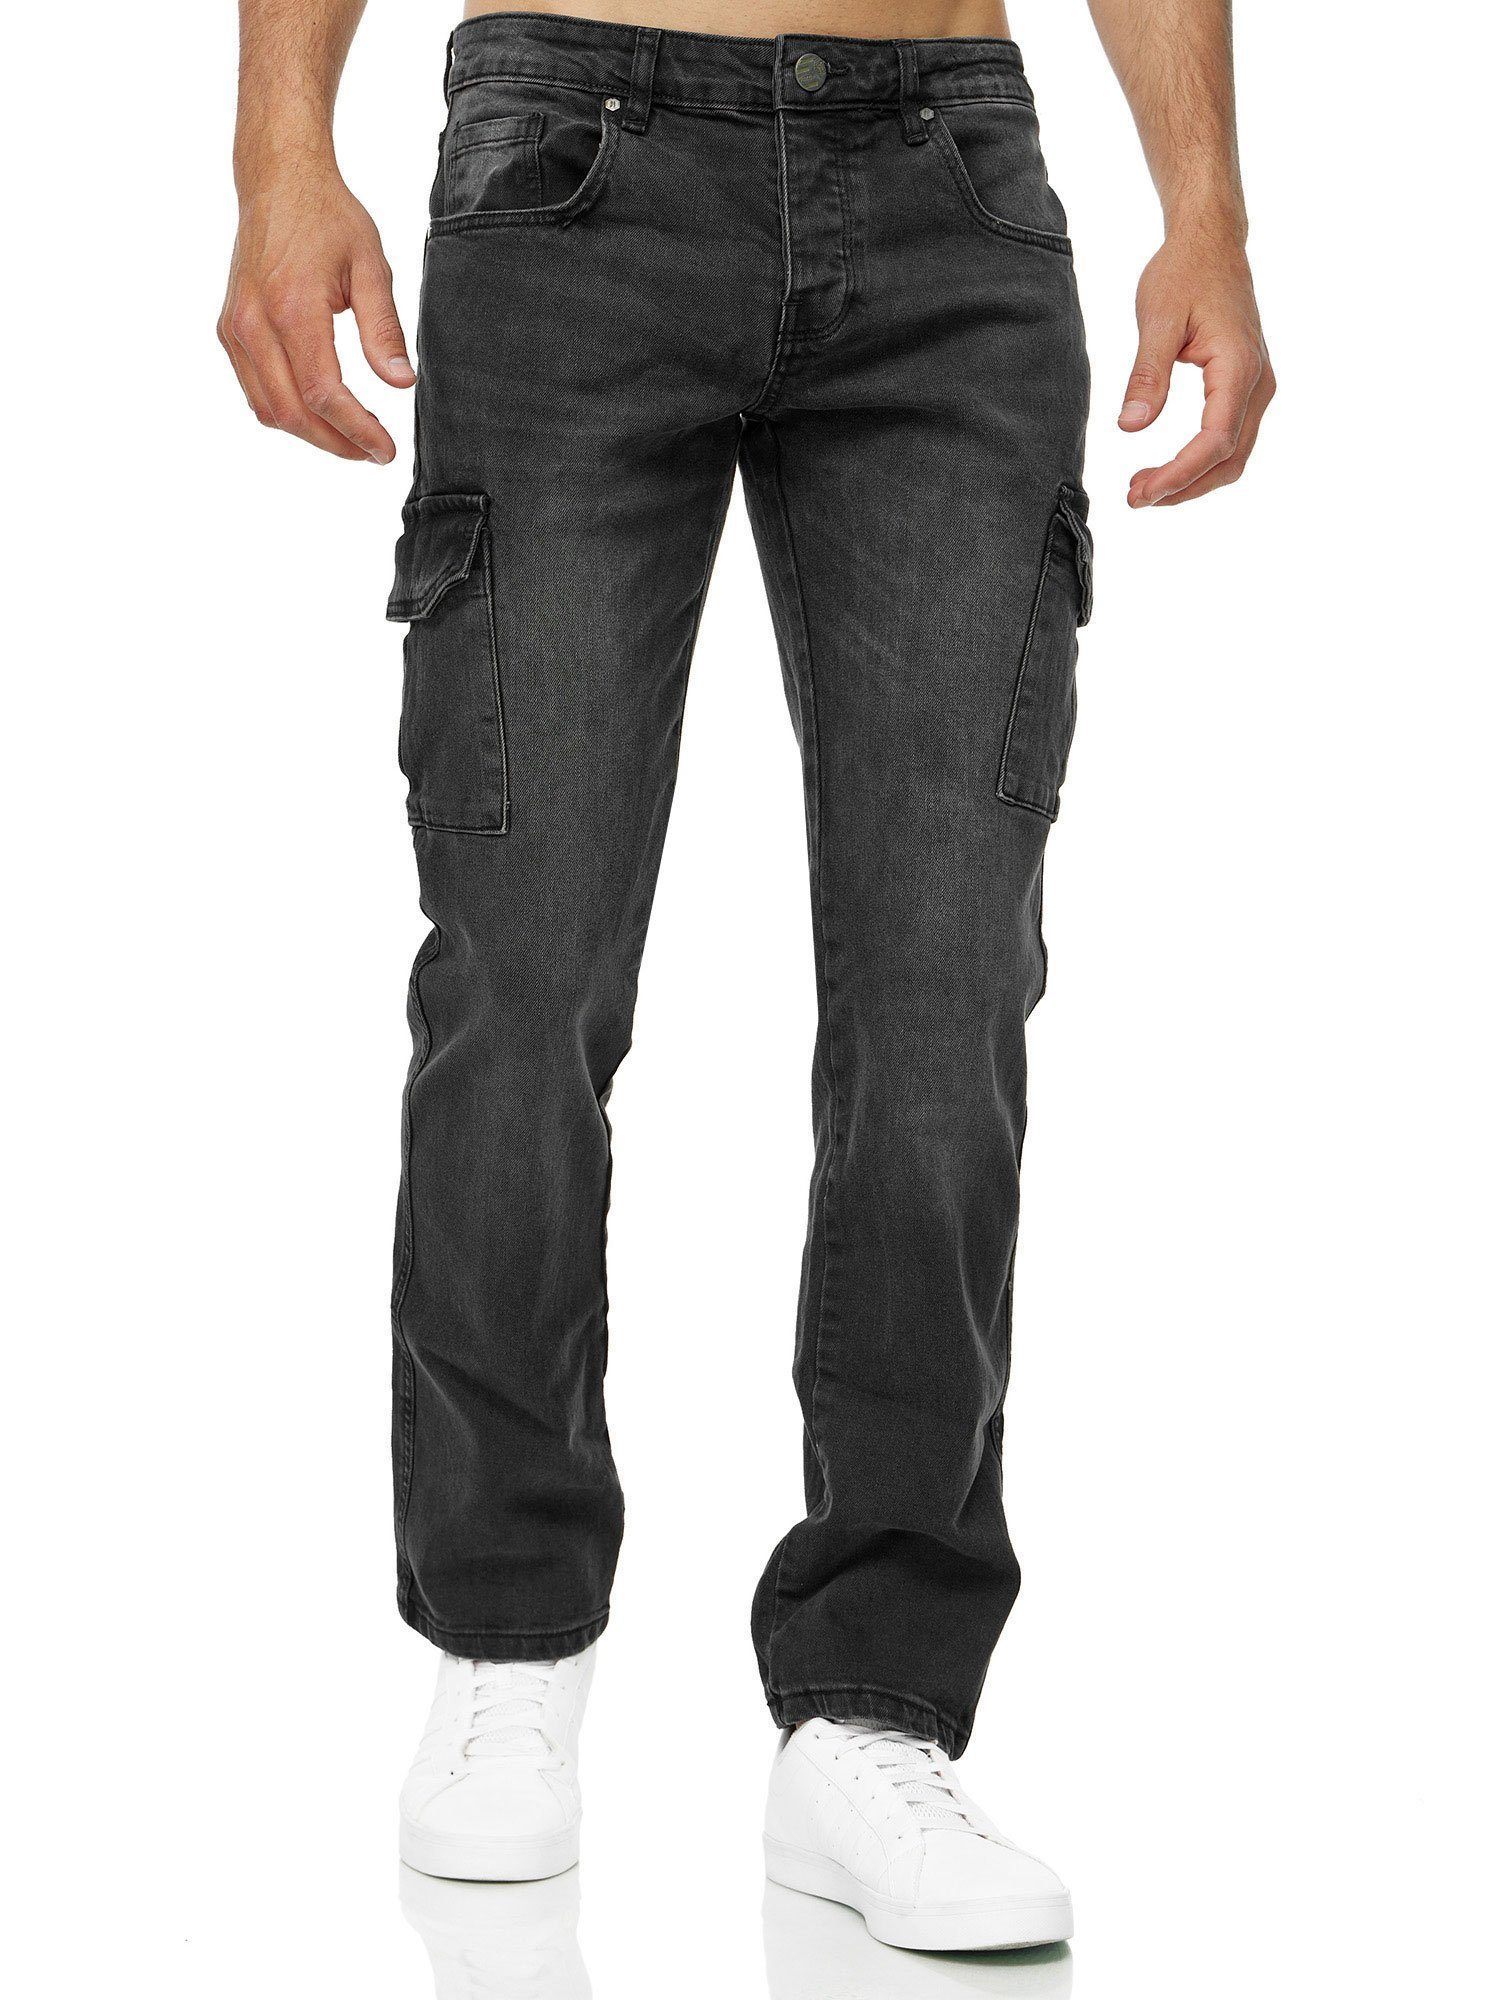 Tazzio Straight-Jeans A104 Regular Fit Cargo Denim Jeans Hose schwarz